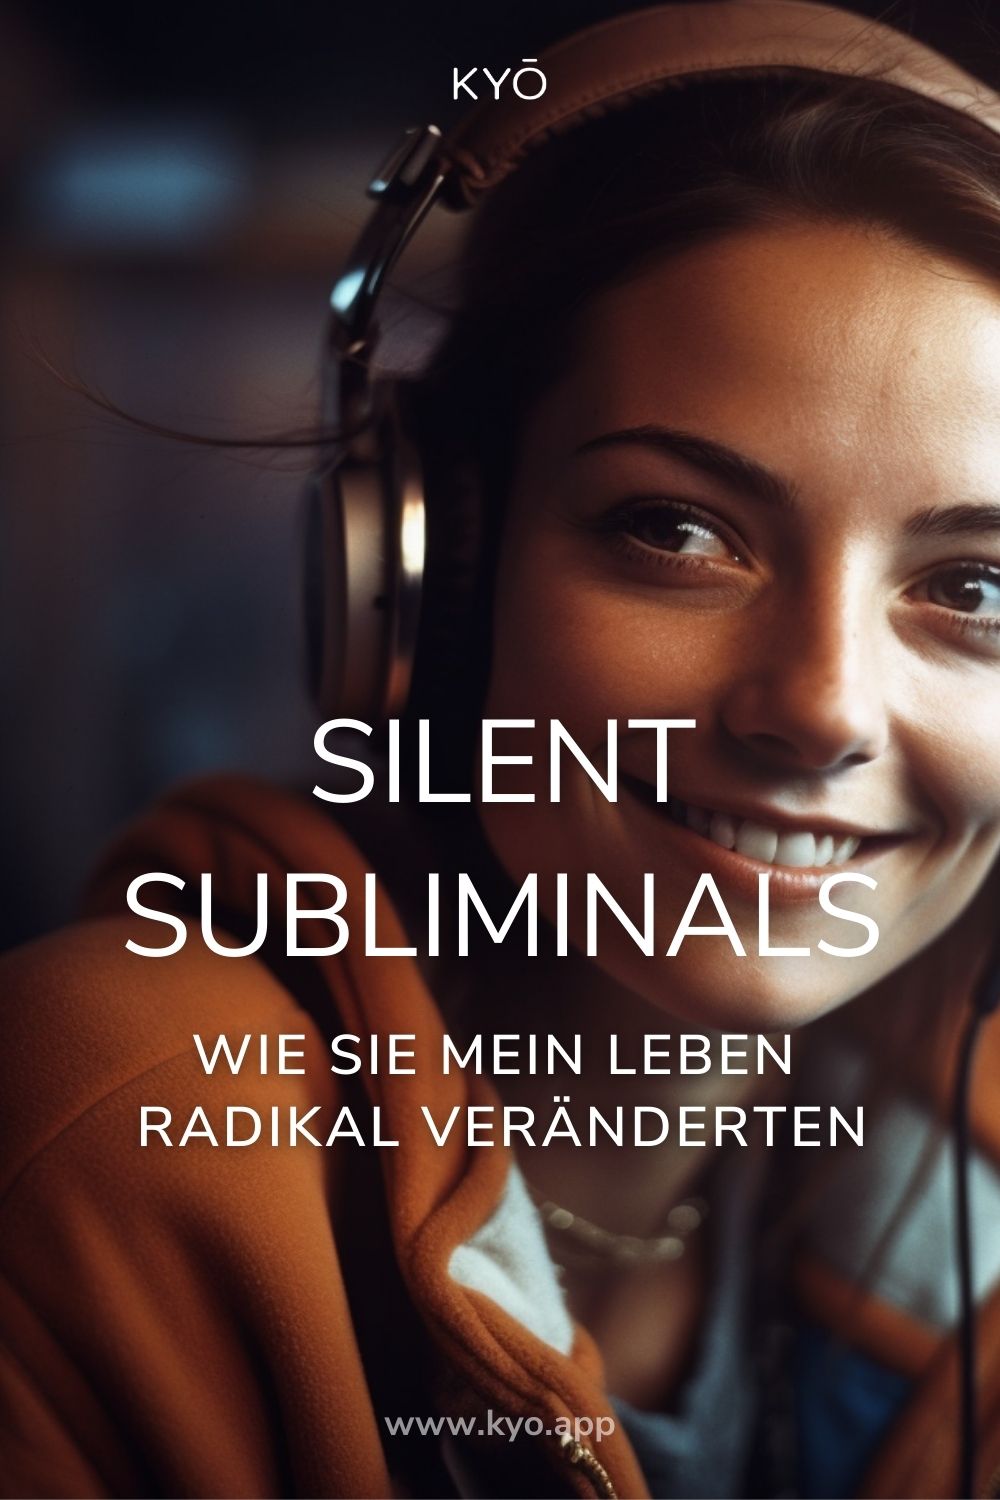 Silent Subliminals - radikale Veränderung zum Positiven